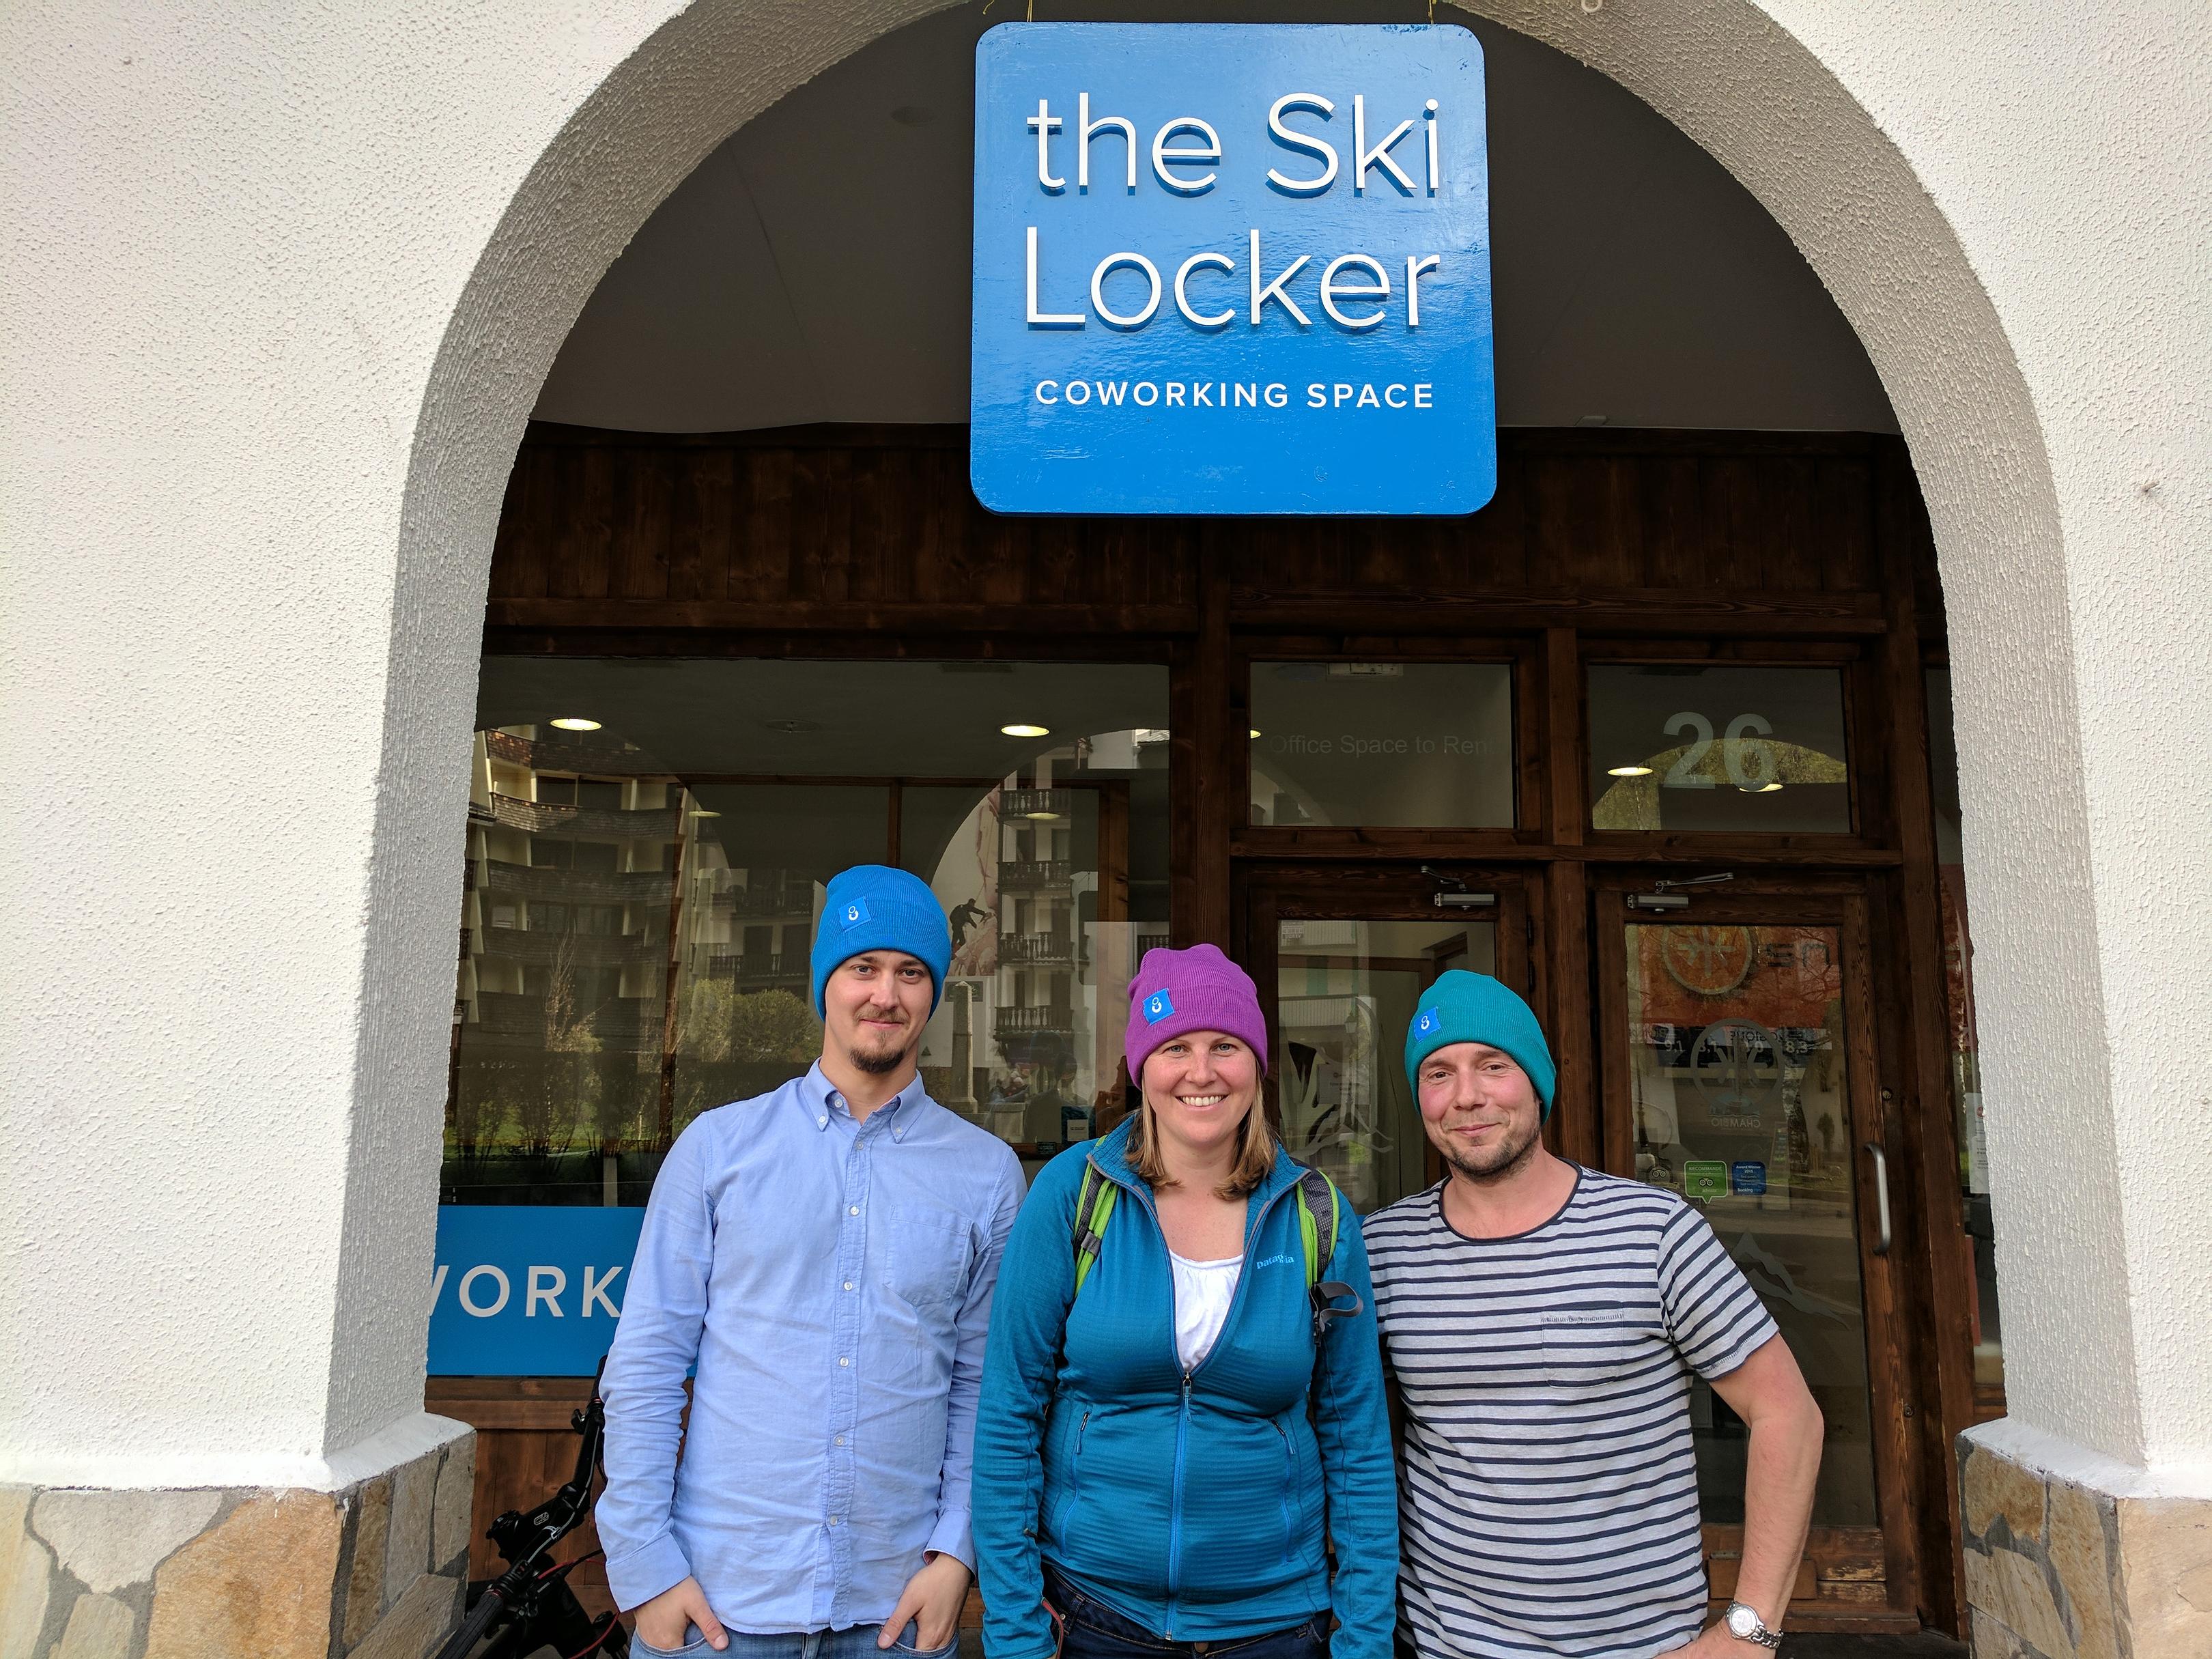 The Ski Locker